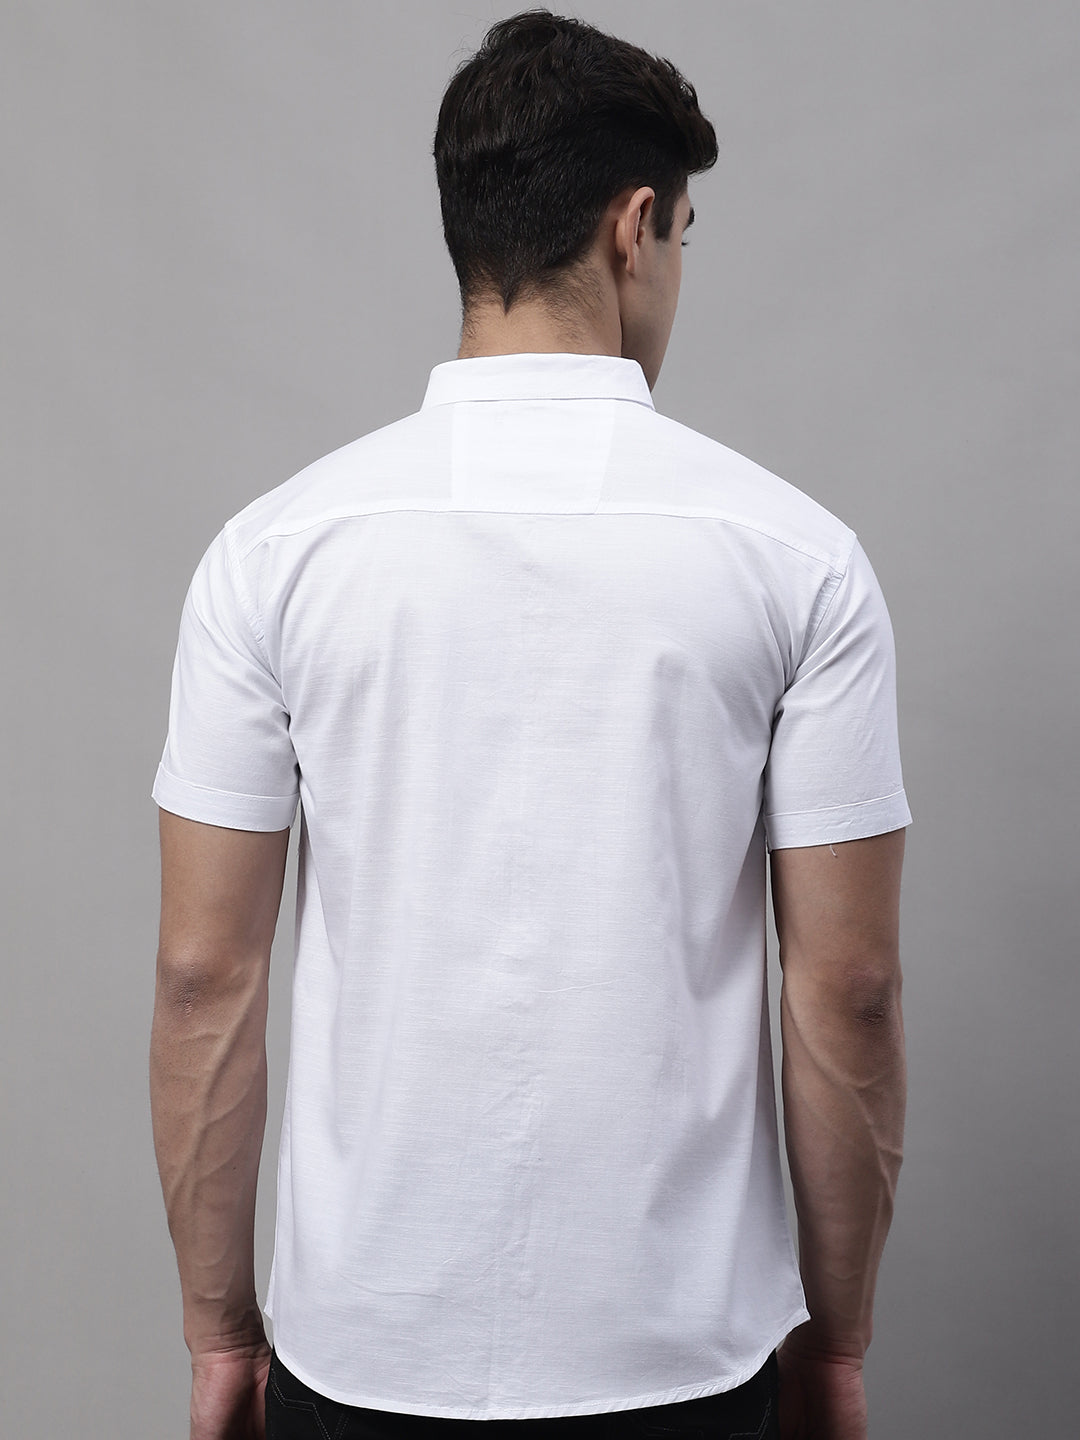 Unique and Fashionable Pure Cotton Half shirt - White